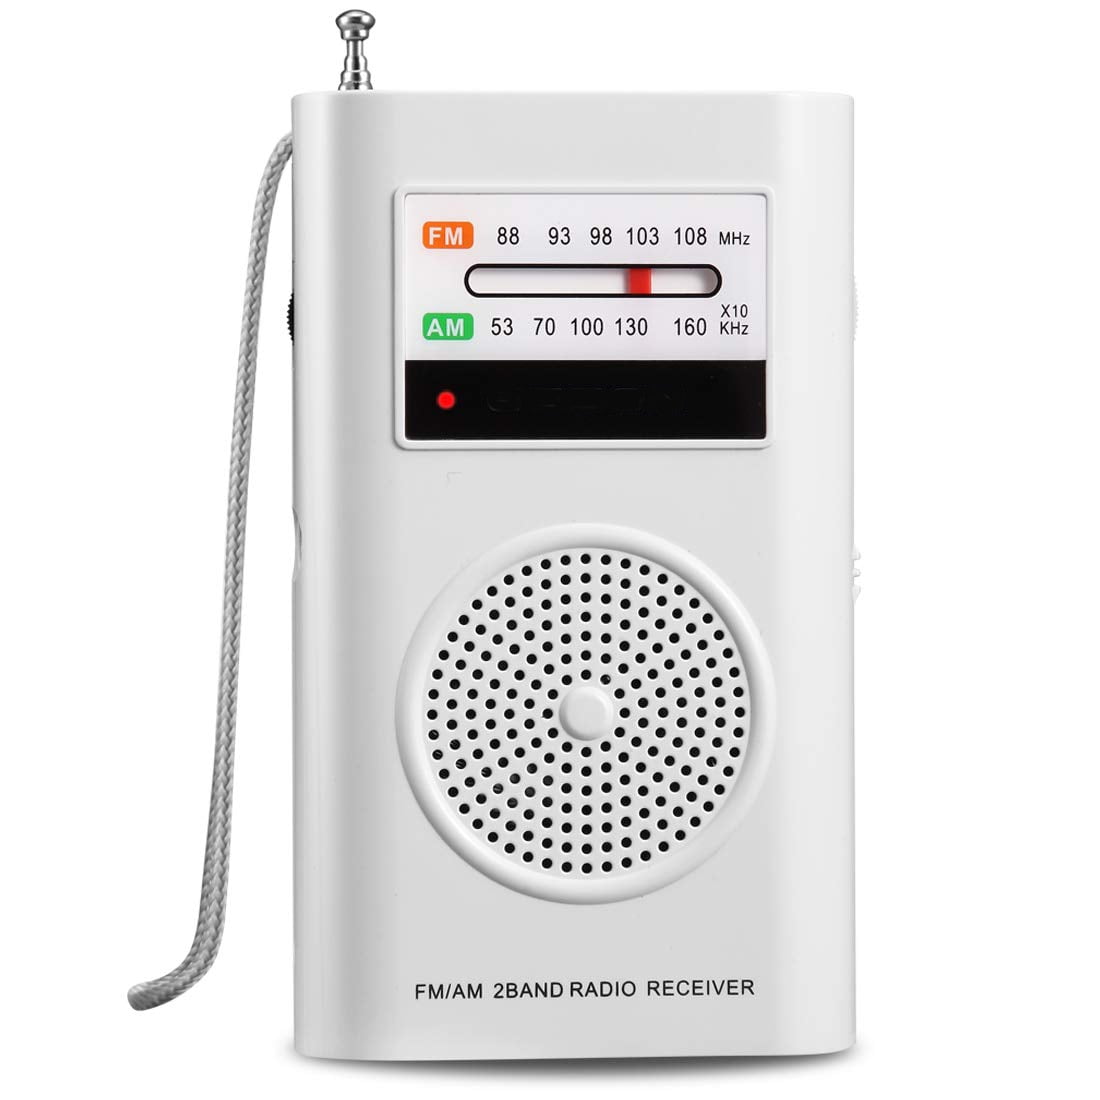 TIVDIO Am Fm Pocket Portable Radio Analog Transistor for Home & Emergency Storm 